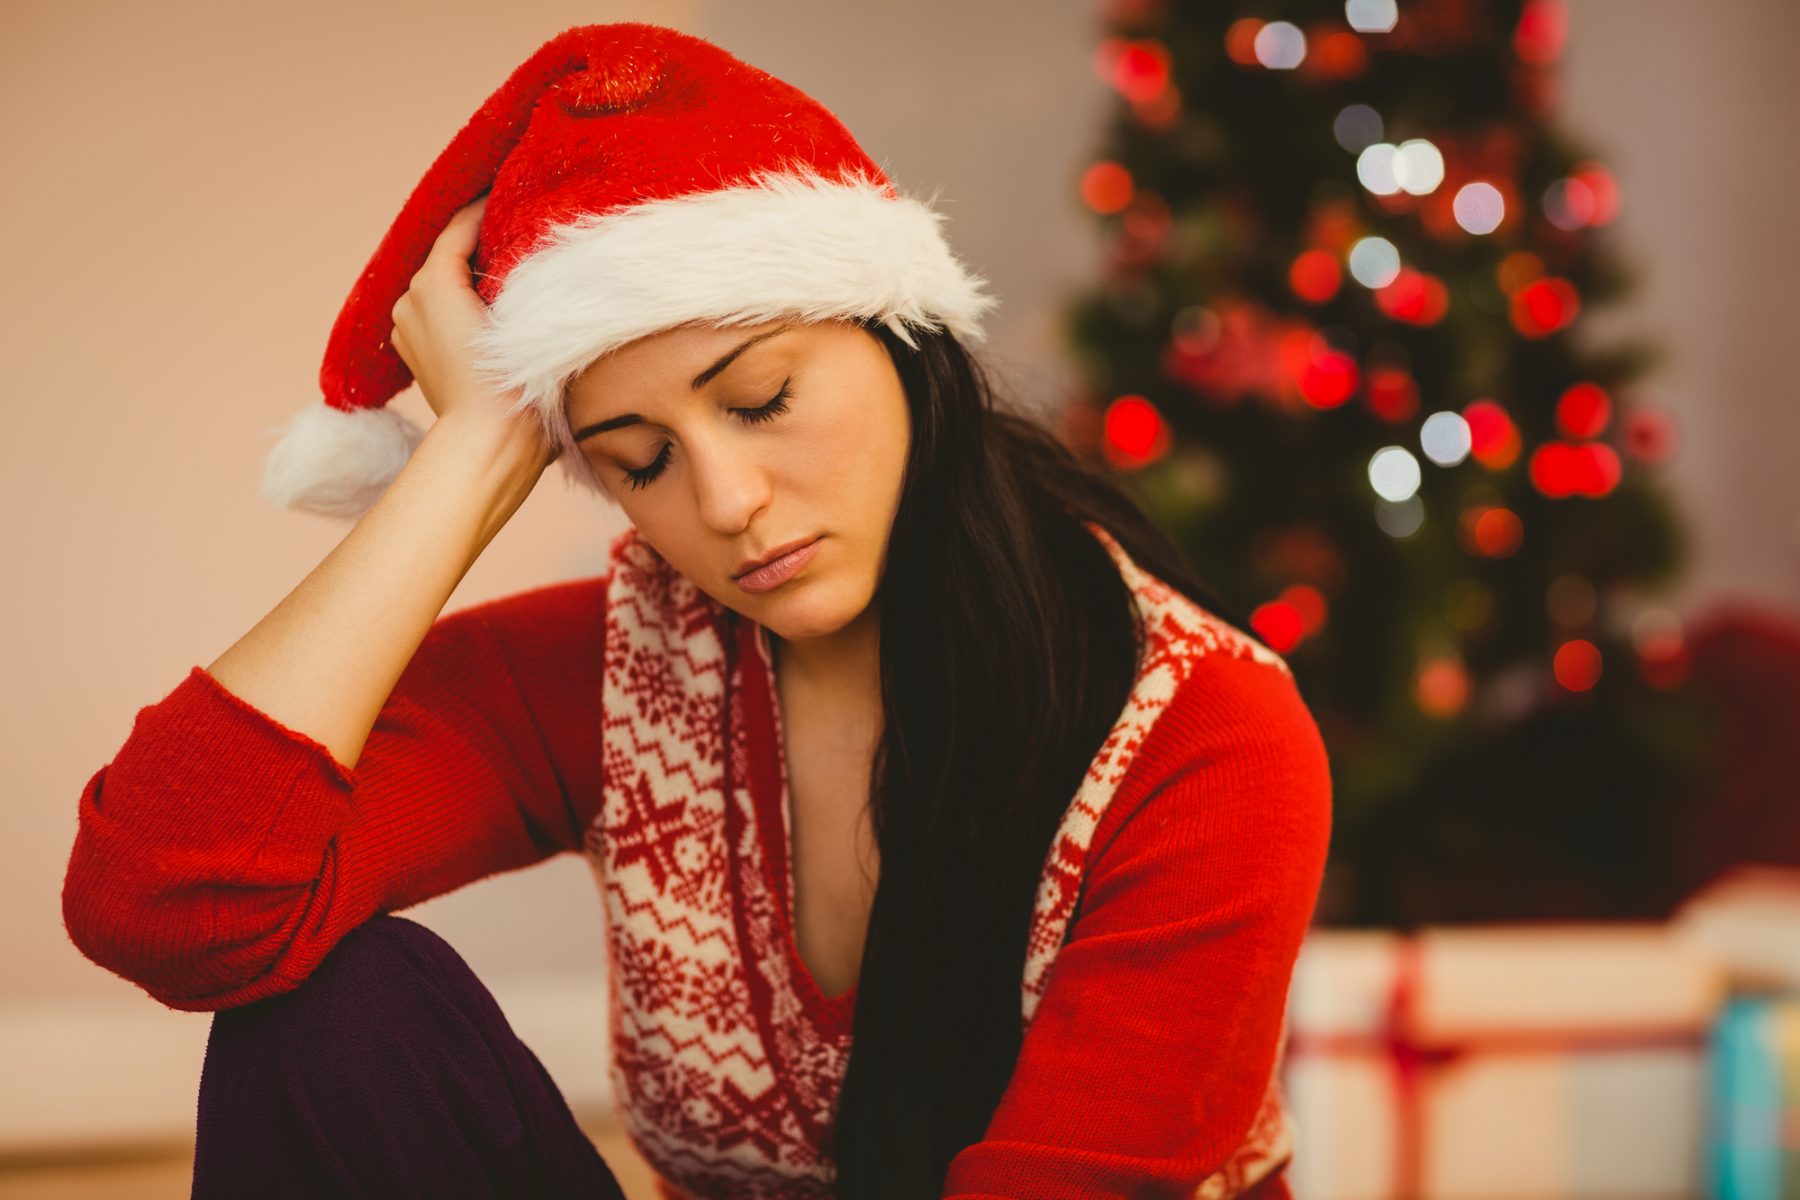 Seasonal Affective Disorder and the Holidays